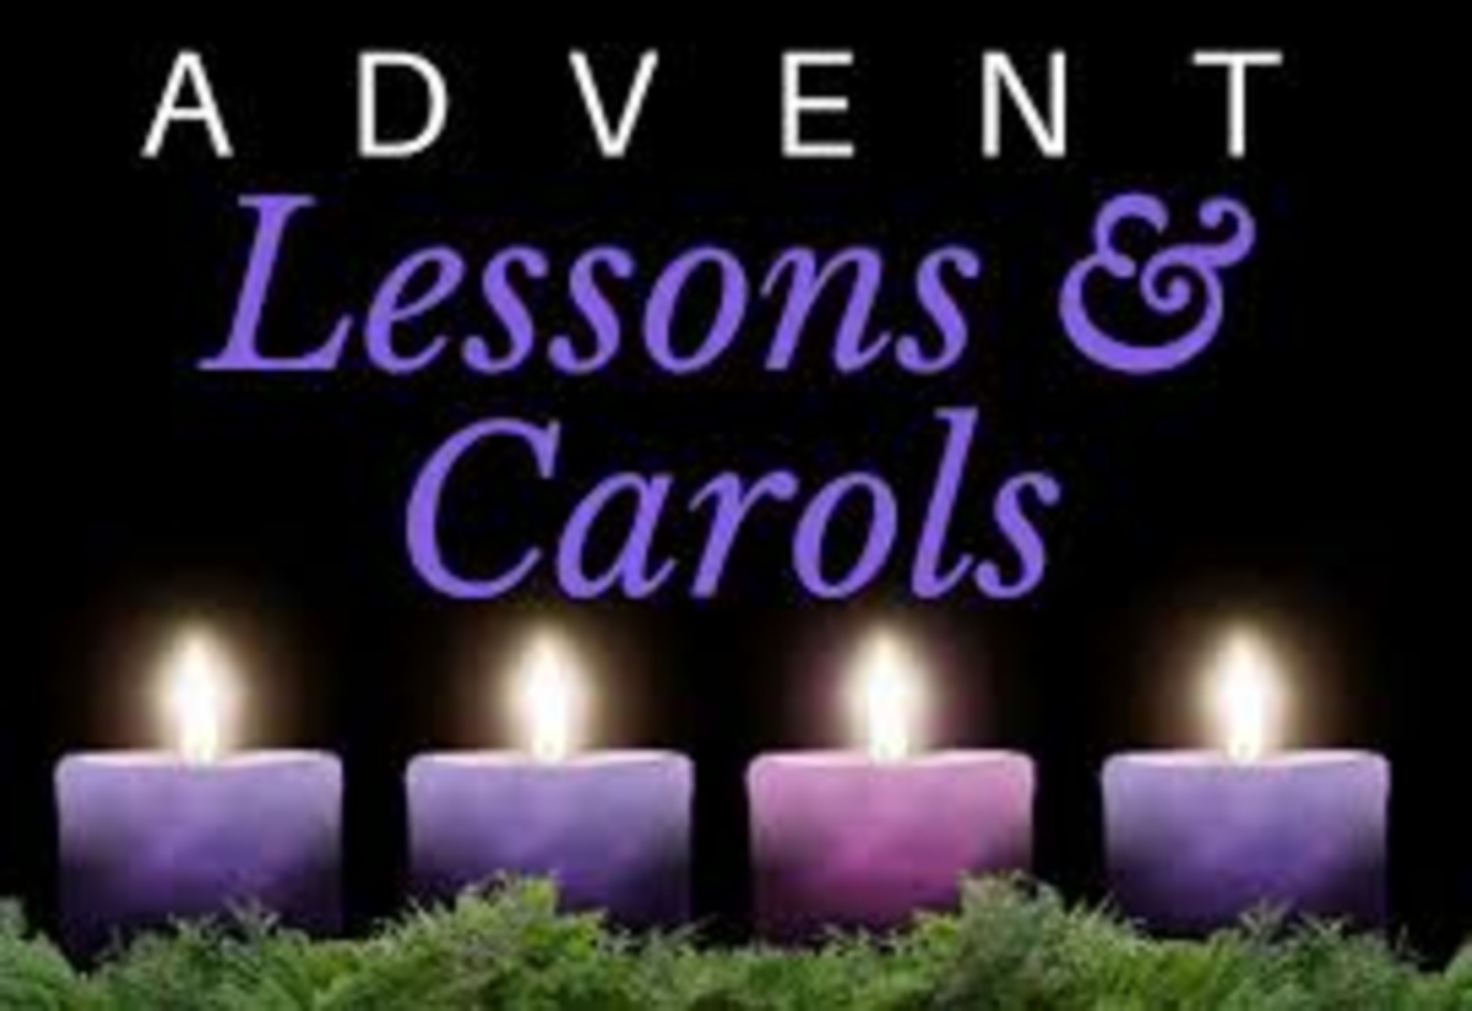 Advent Lessons Carols